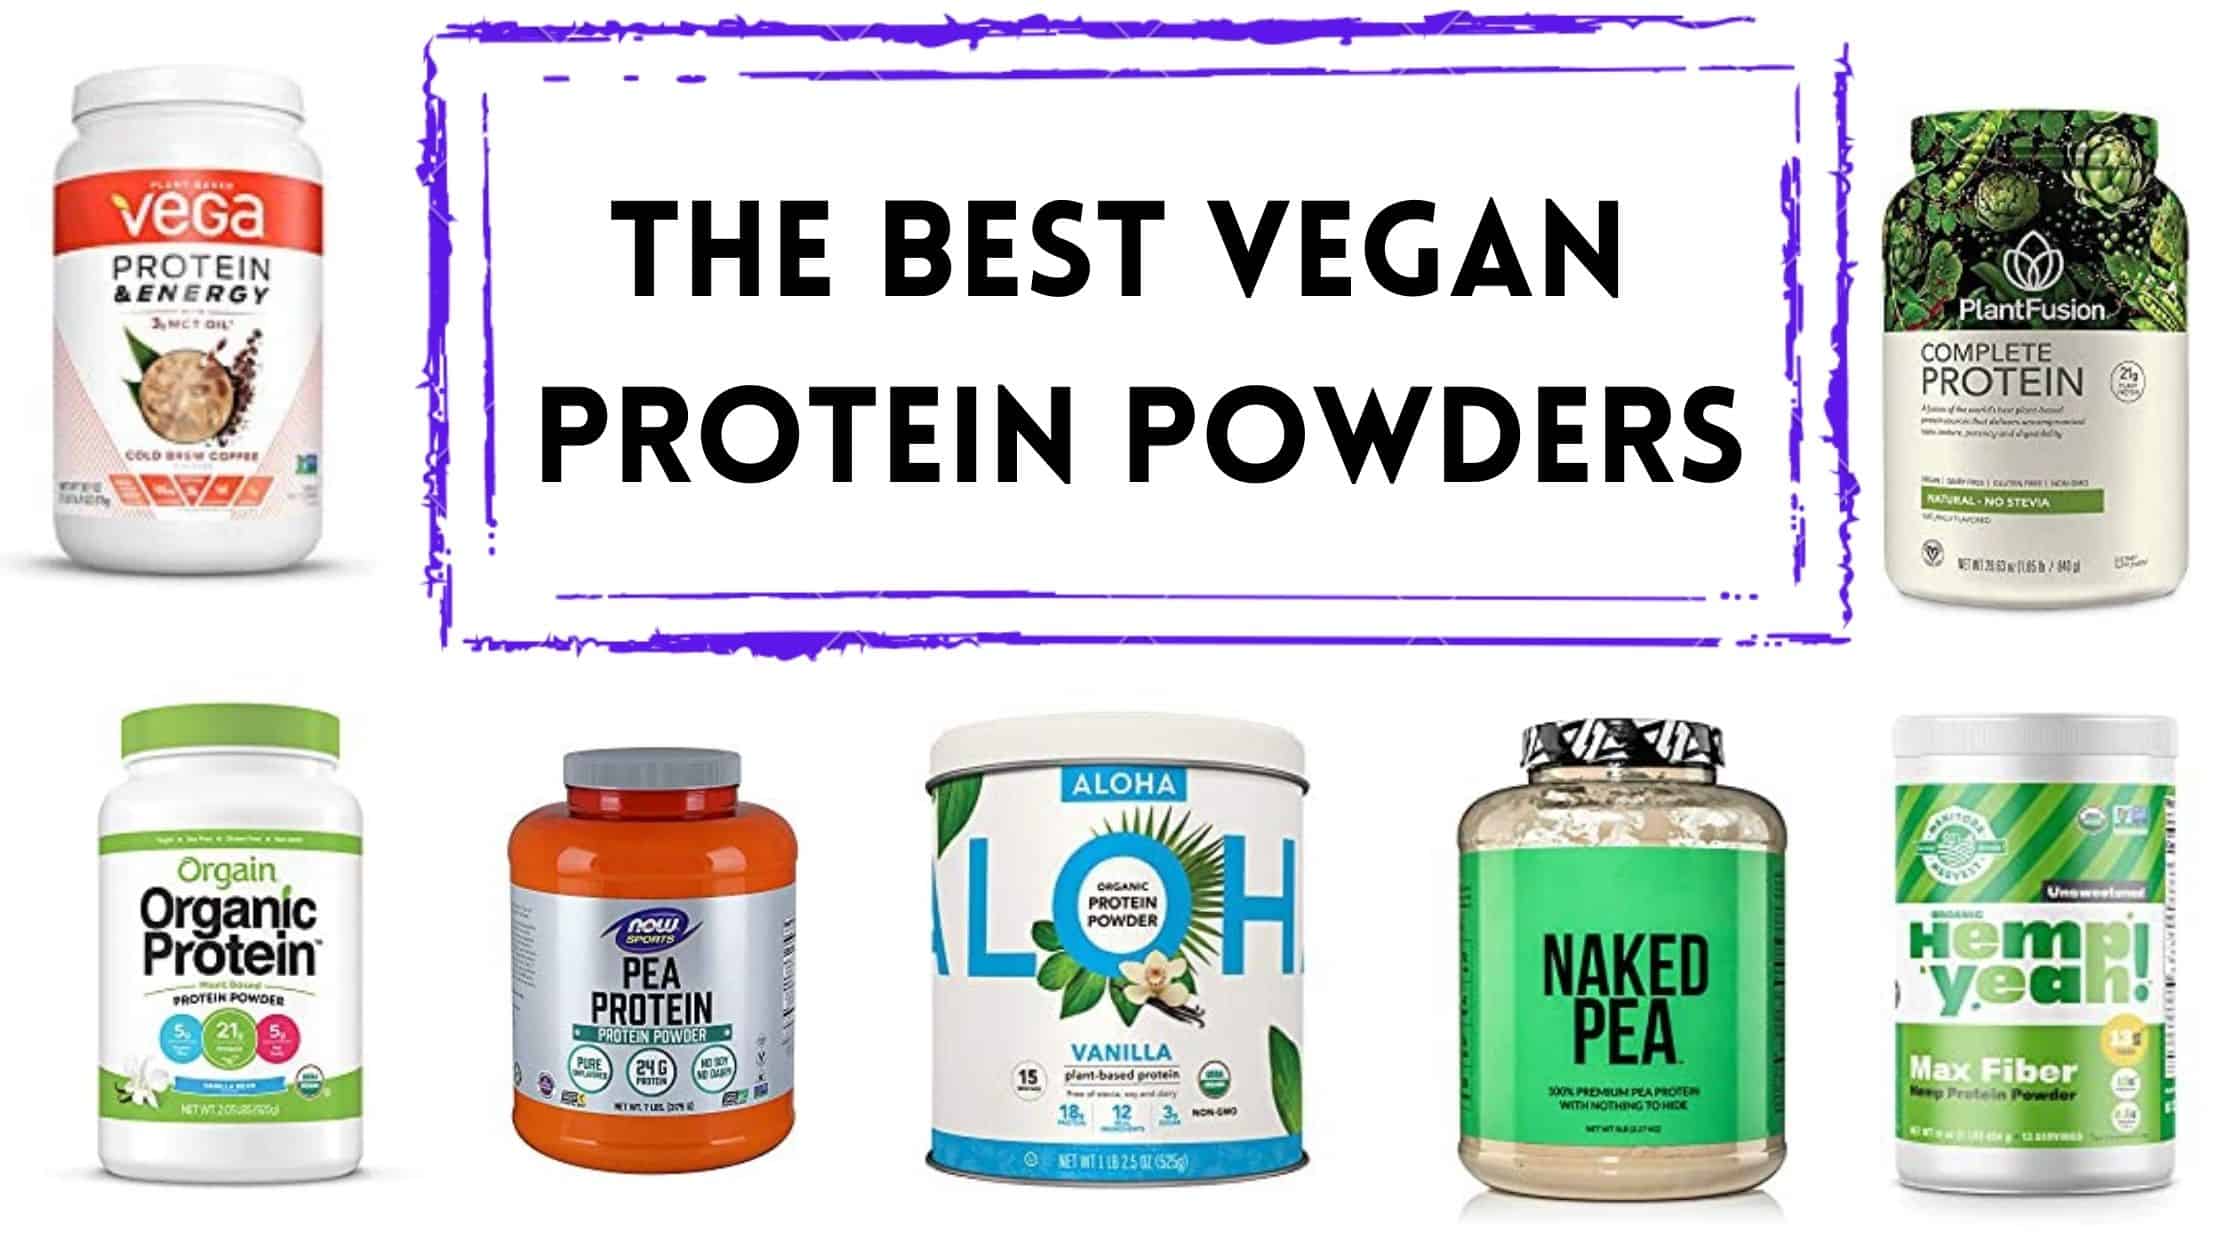 The Best Vegan Protein Powders